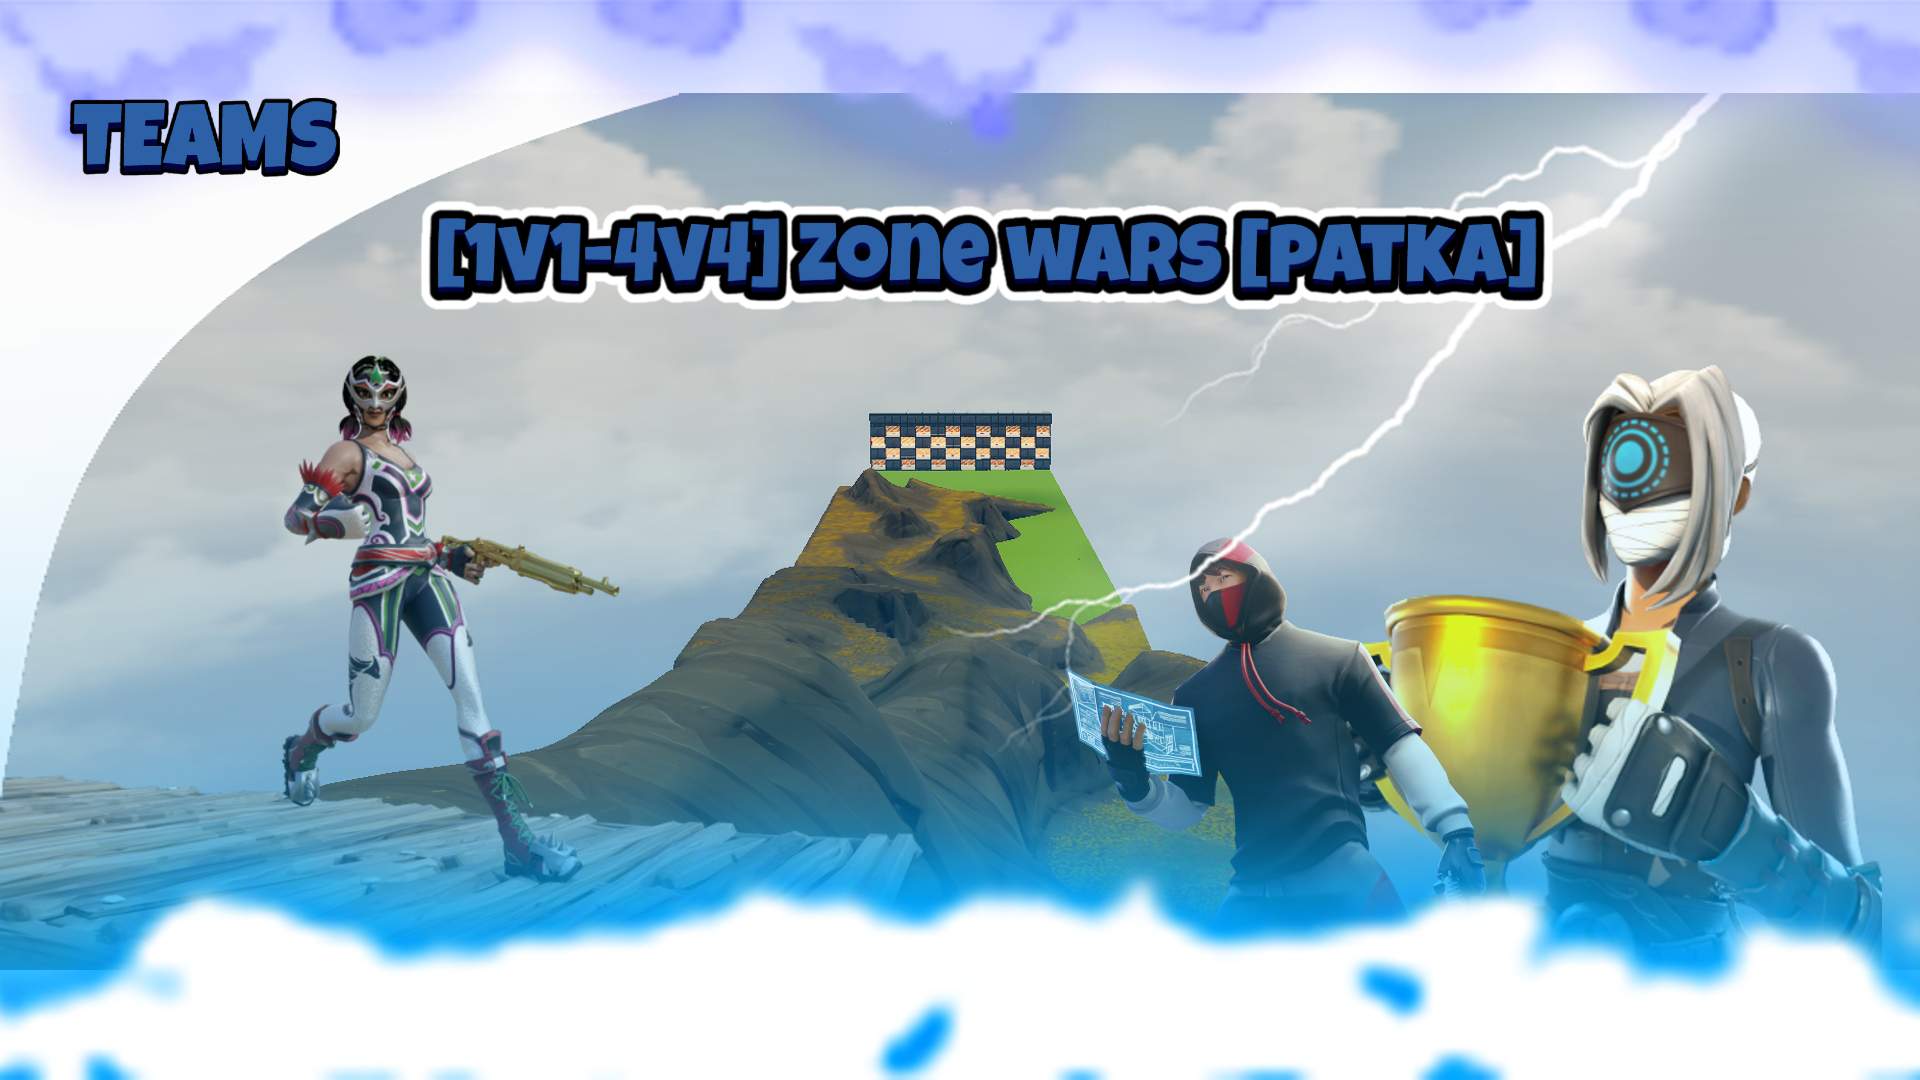 Team Zone Wars [PATKA]